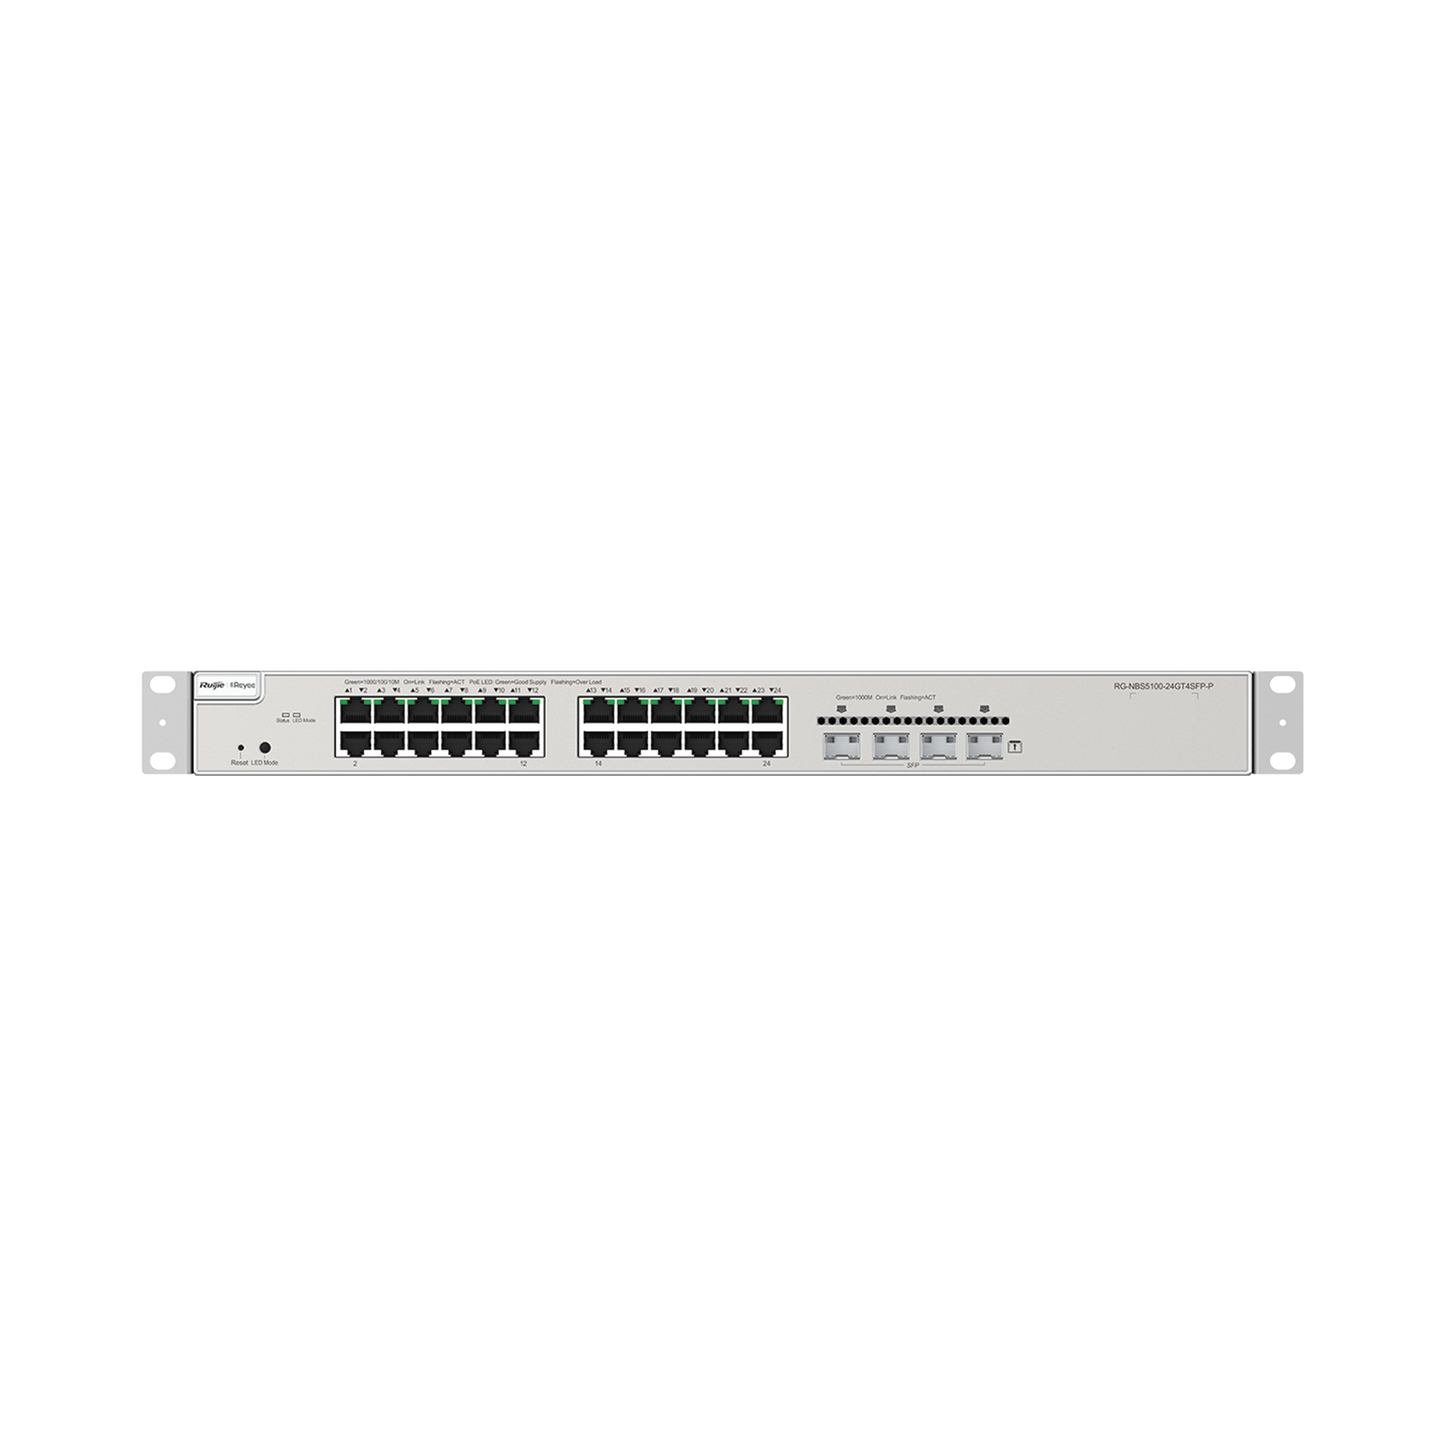 RG-NBS5200-24GT4XS, 24-port Gigabit Layer 3 Non-PoE Switch, 4 SFP+ Uplink